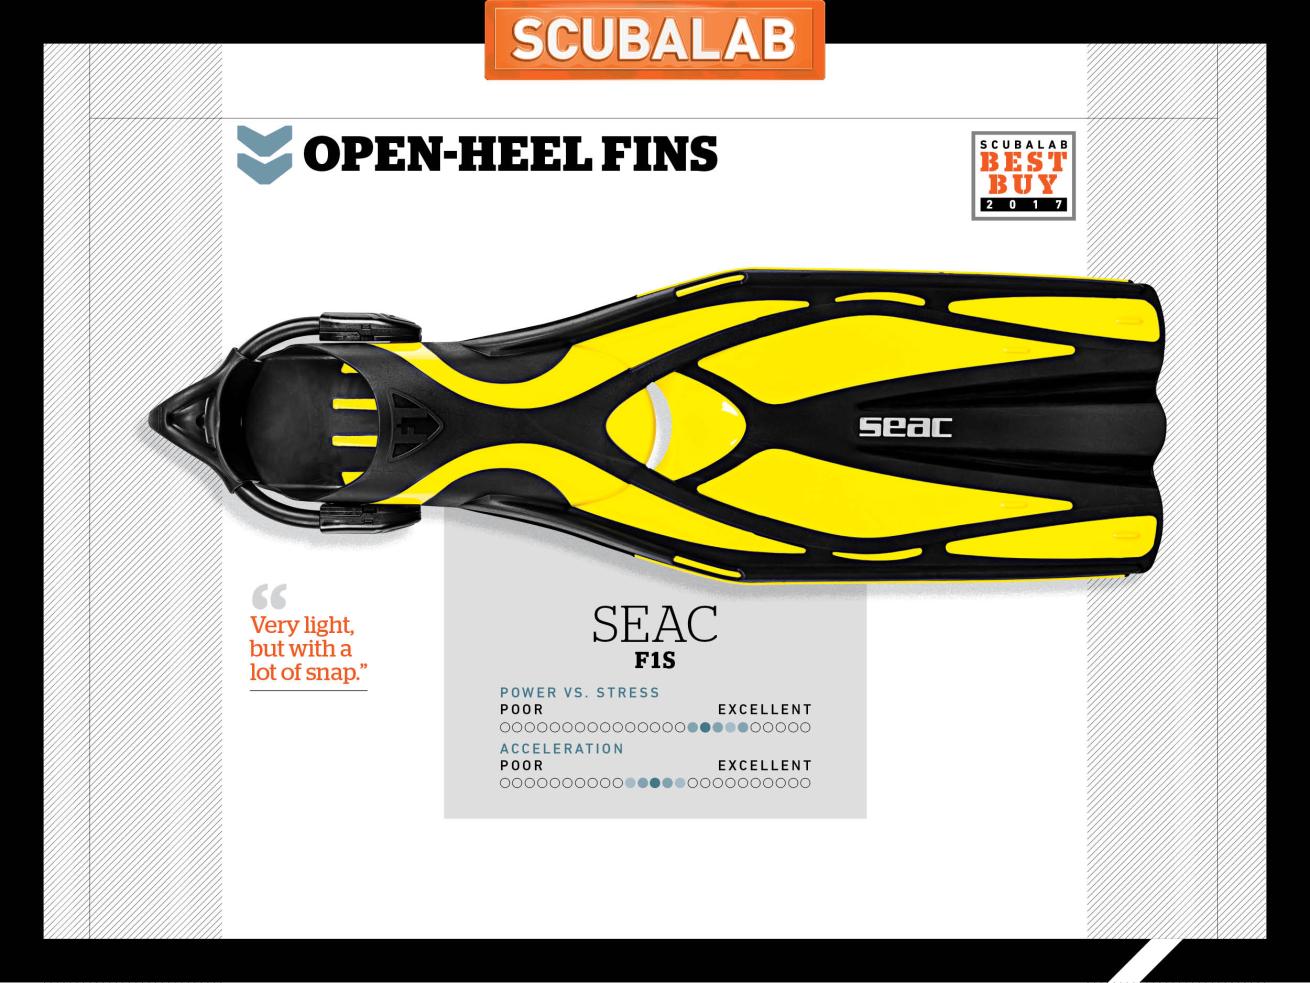 Seac F1S Scuba Diving Fin ScubaLab Review Test